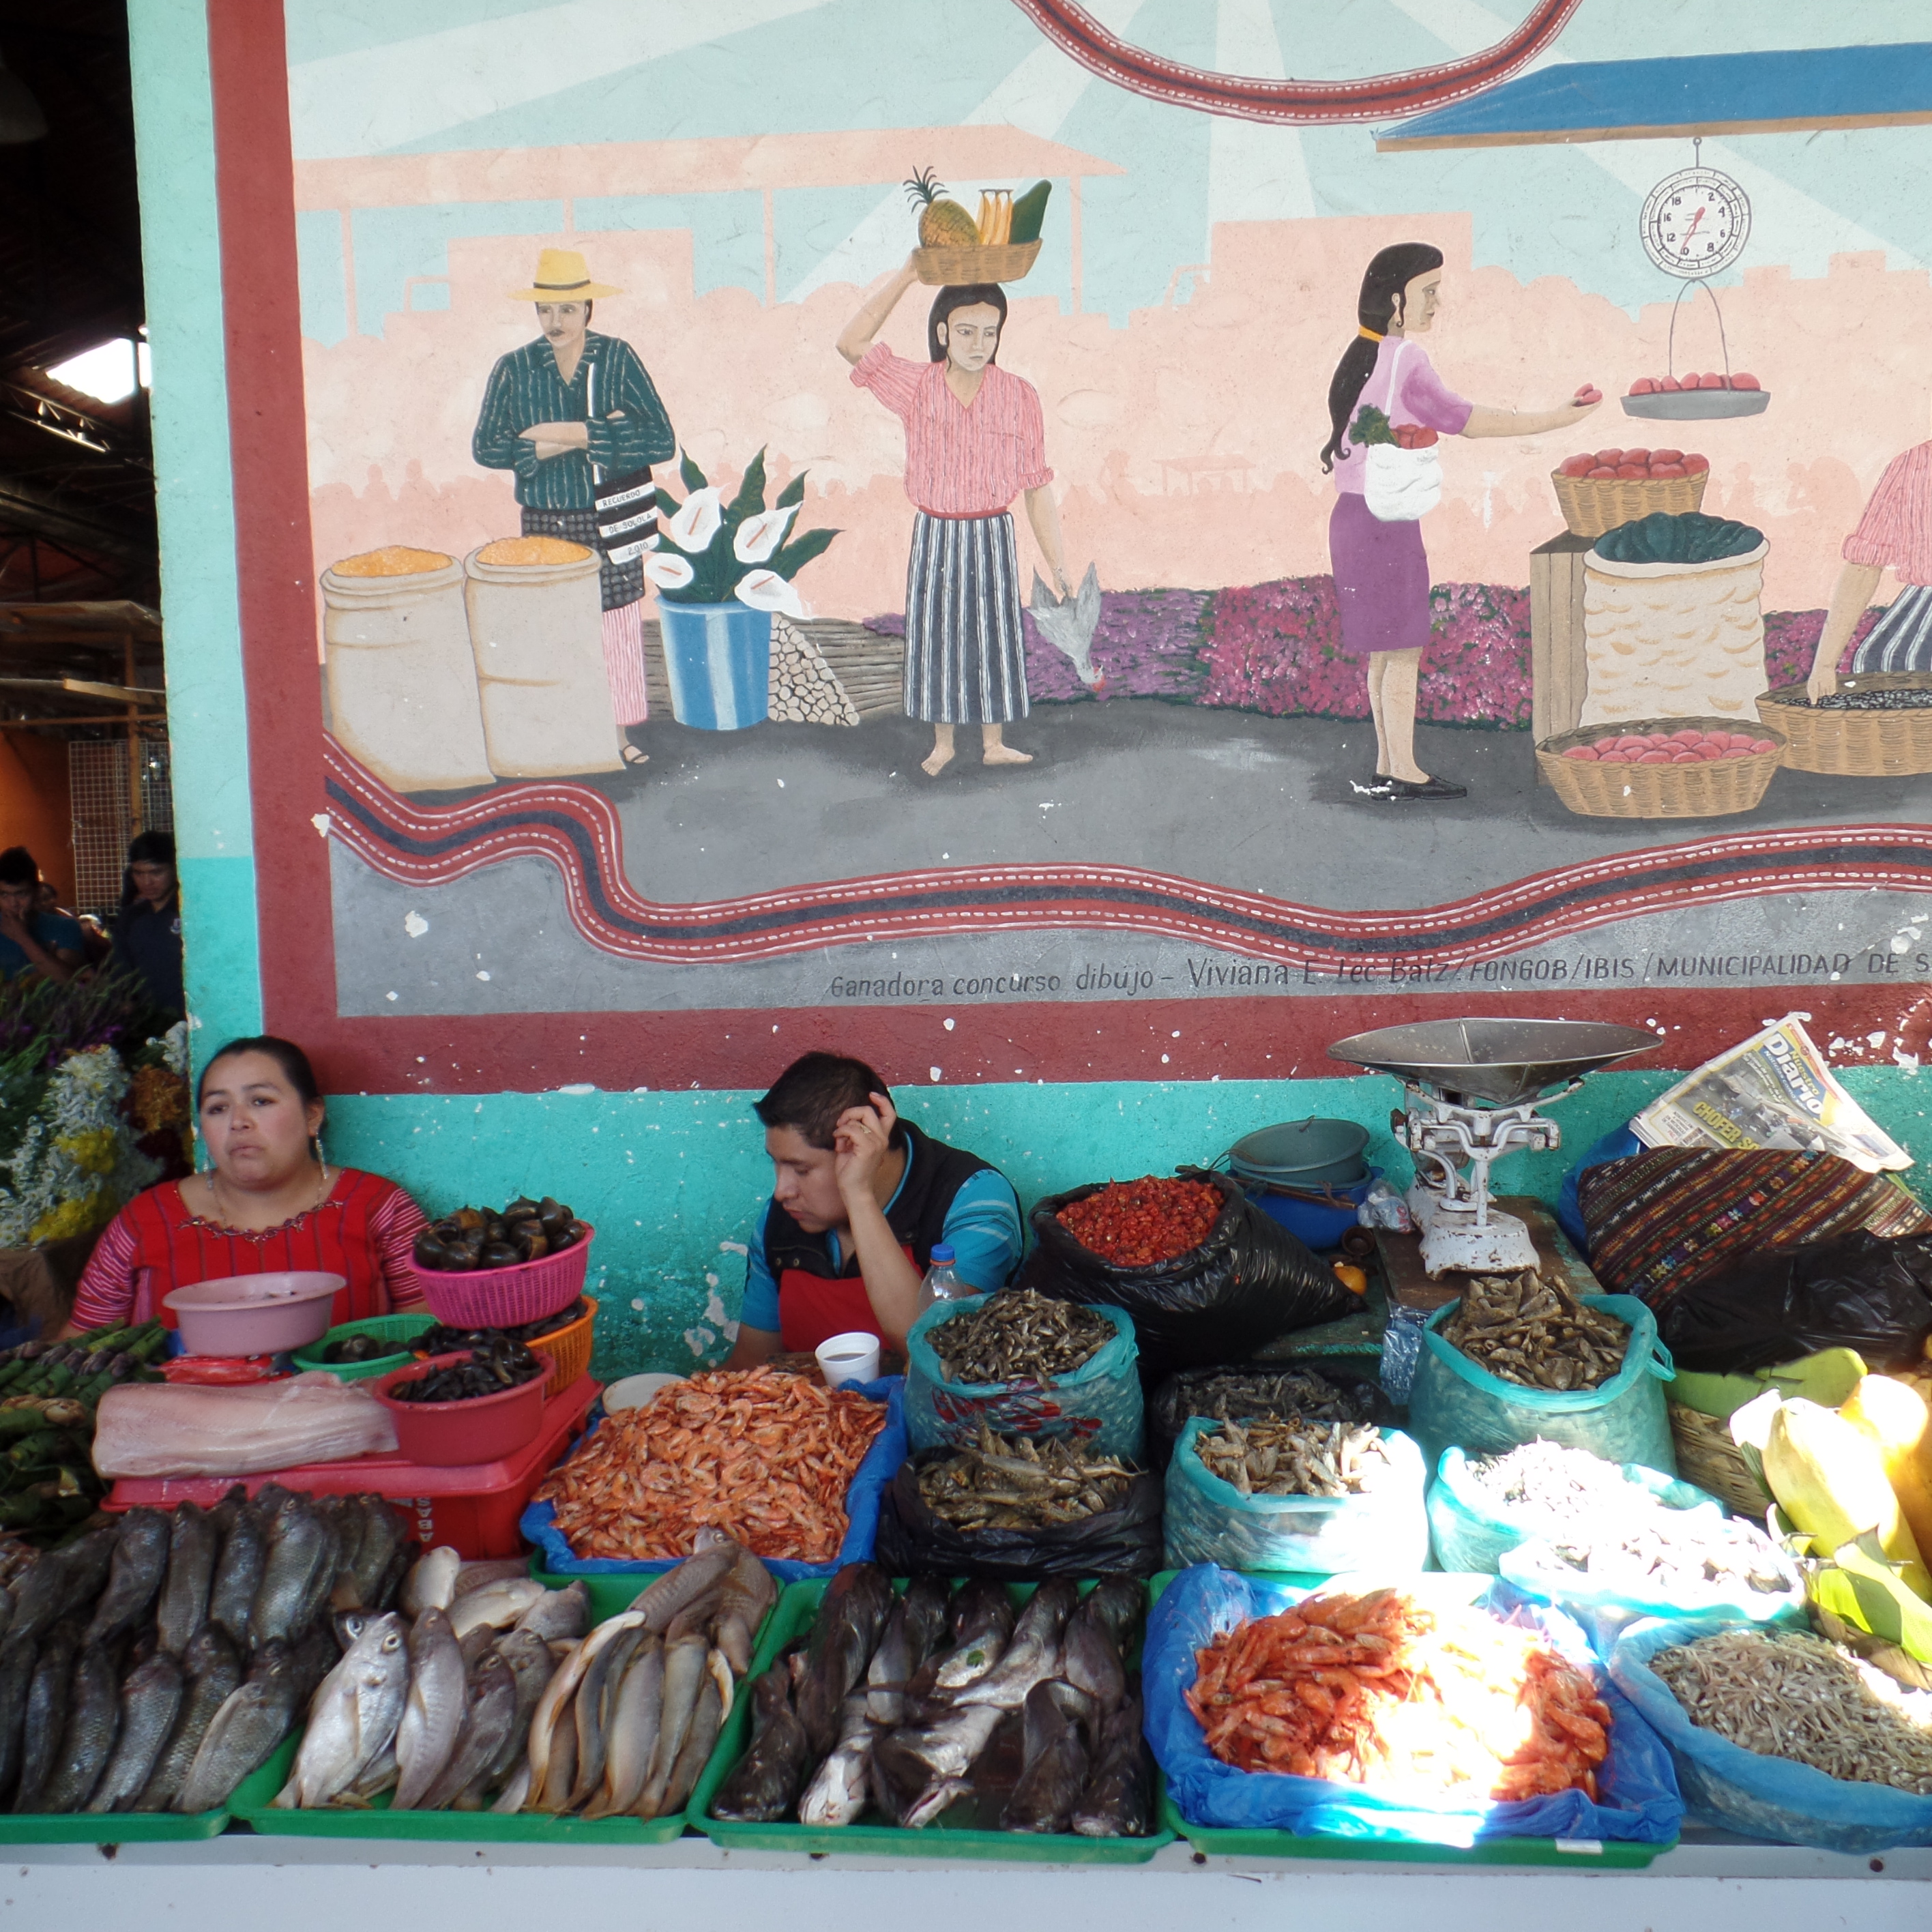 Solola food market near Panajachel Lake Atitlan Guatemala